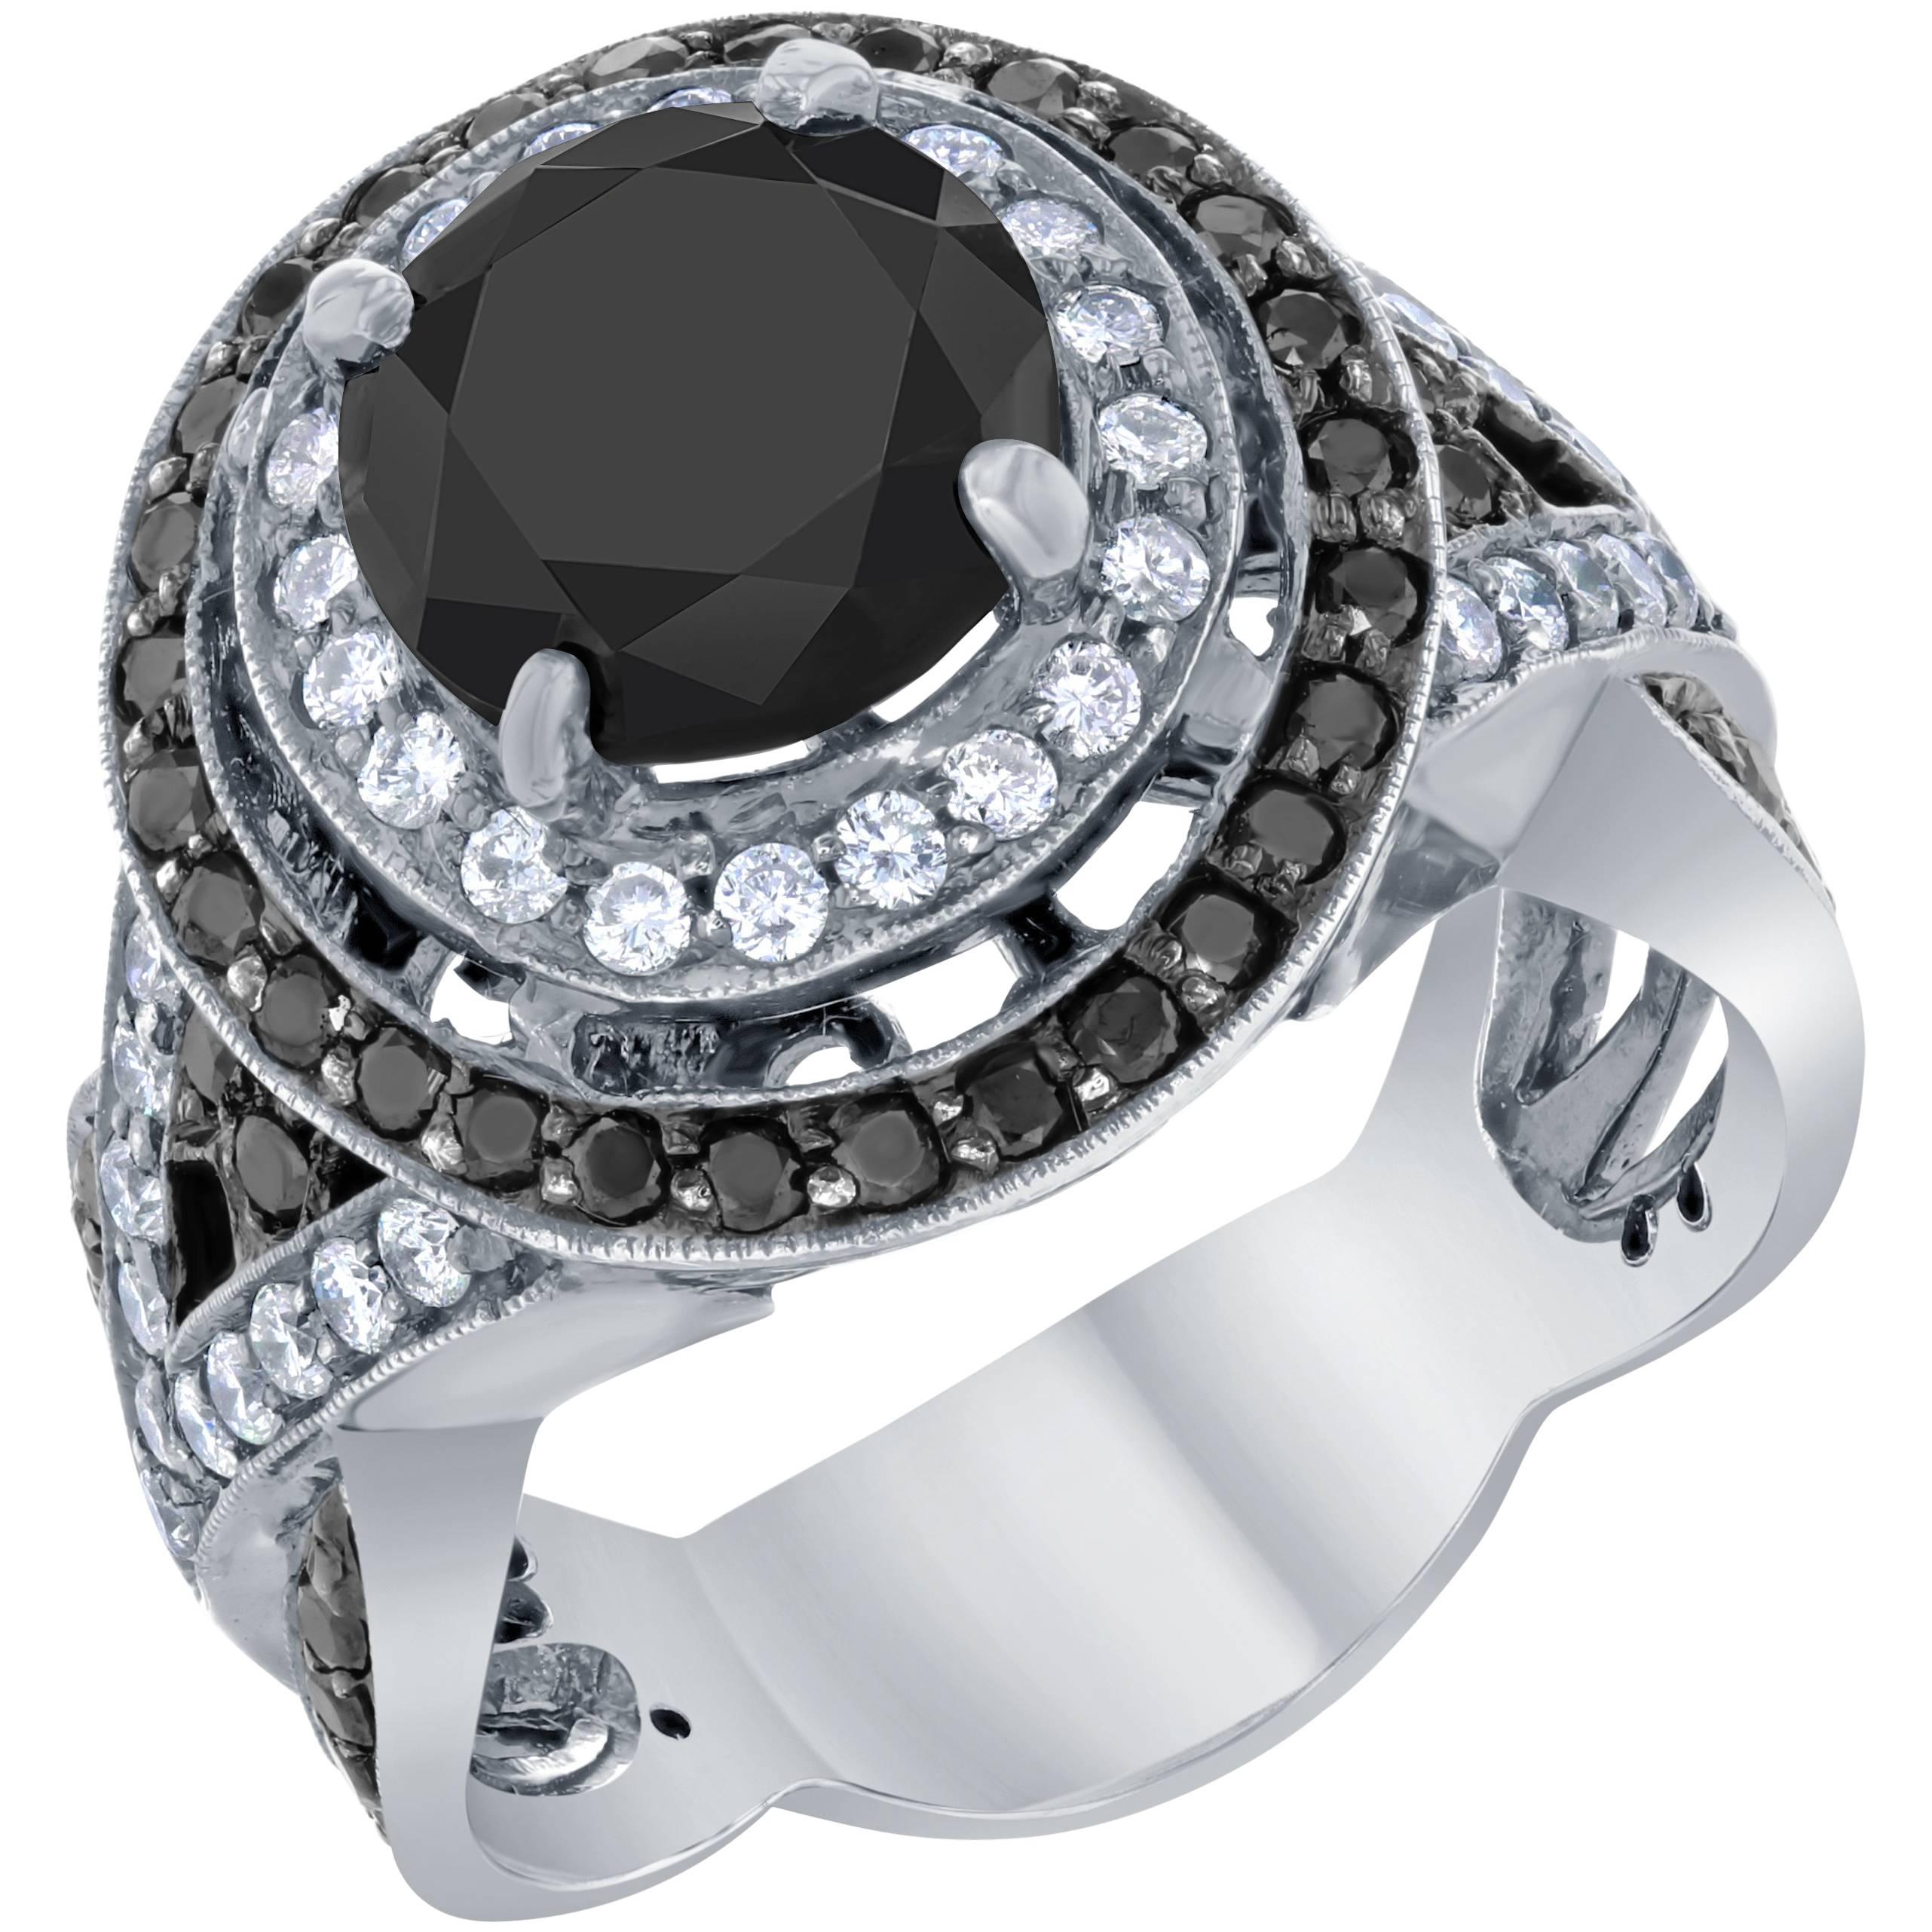 4.51 Carat Round Cut Black Diamond White Gold Bridal Ring